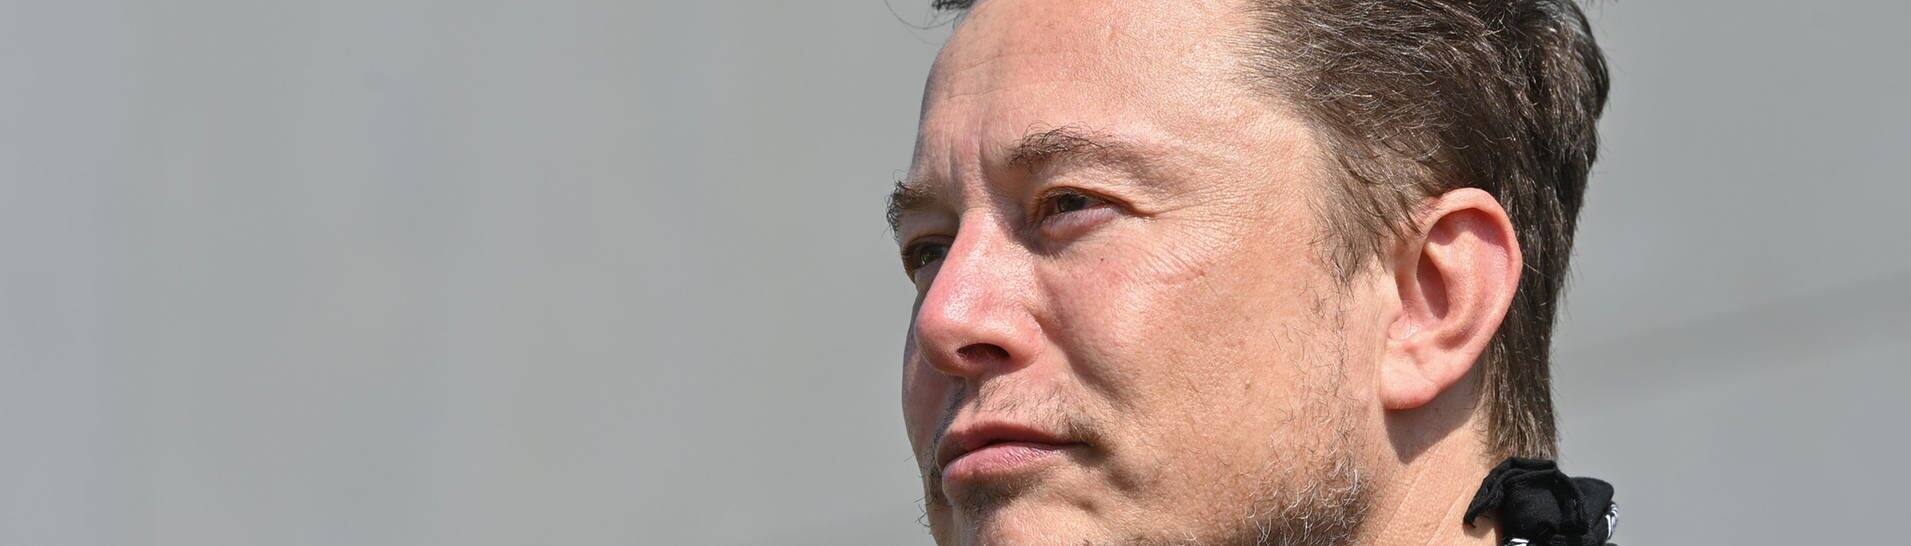 Tesla-Chef Elon Musk. (Foto: dpa Bildfunk, picture alliance/dpa/dpa-Zentralbild/POOL | Patrick Pleul)